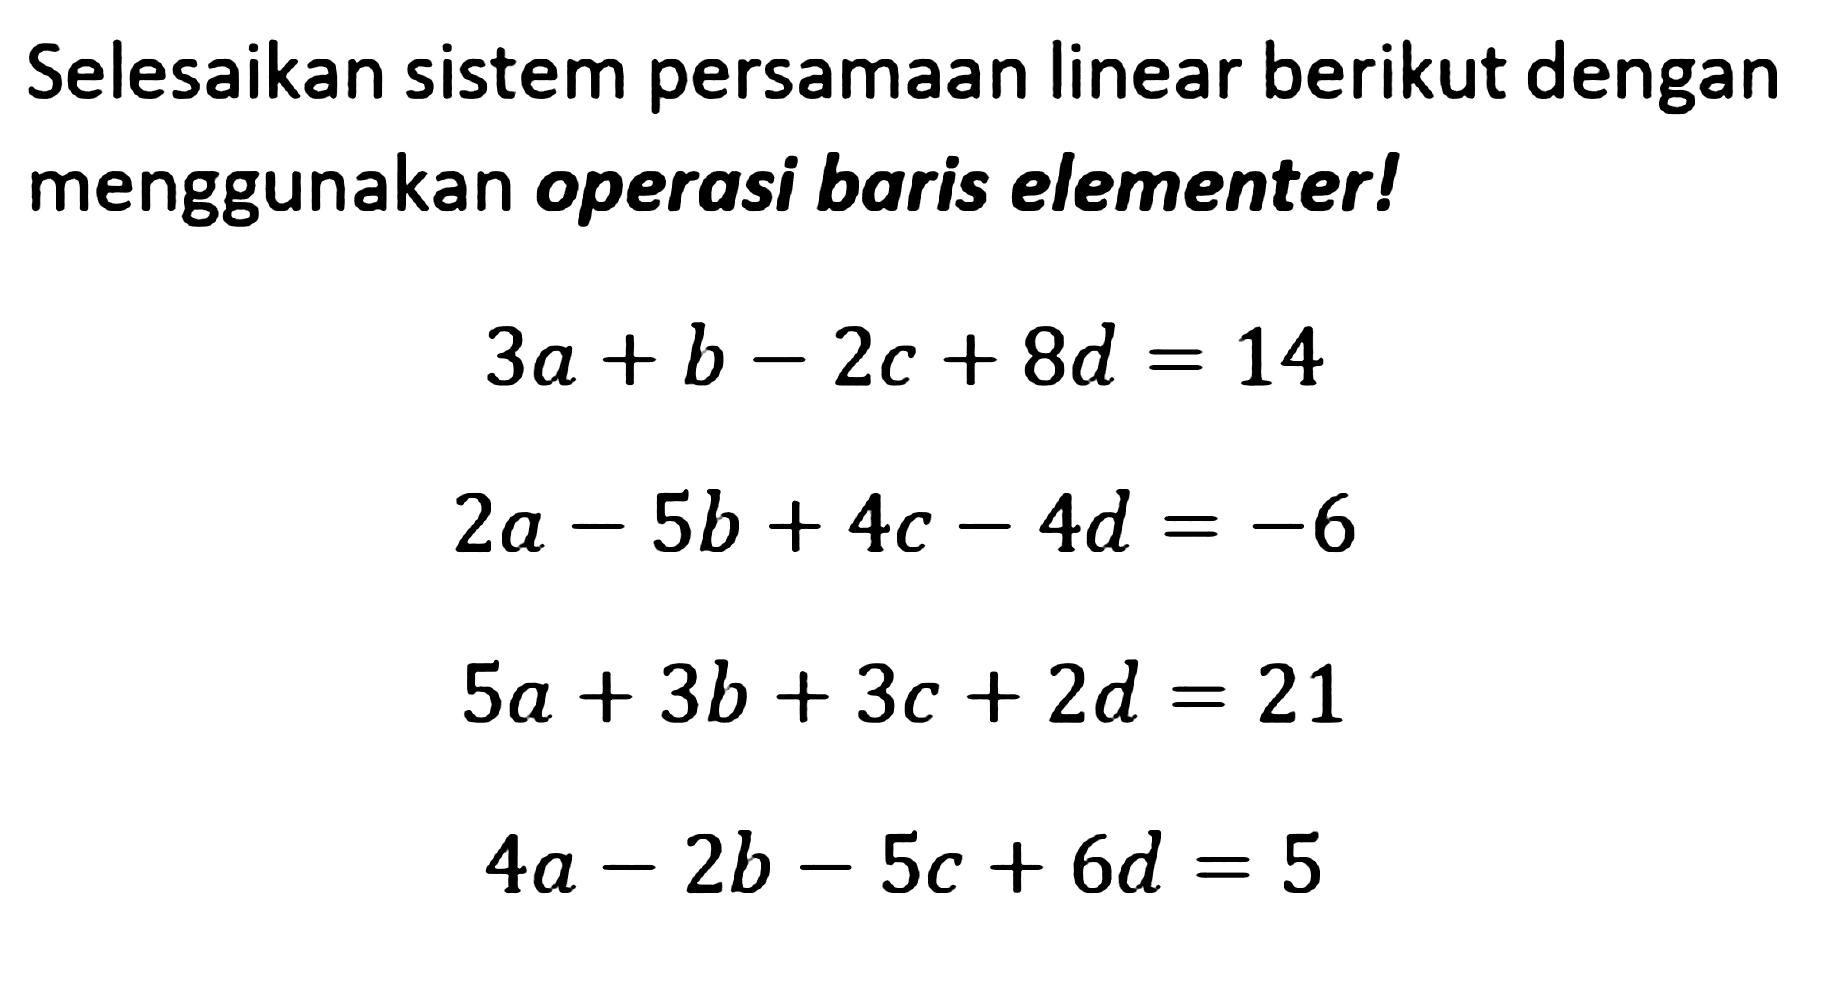 Selesaikan sistem persamaan linear berikut dengan menggunakan operasi baris elementer! 3a+b-2c+8d=14 2a-5b+4c-4d=-6 5a+3b+3c+2d=21 4a-2b-5c+6d=5